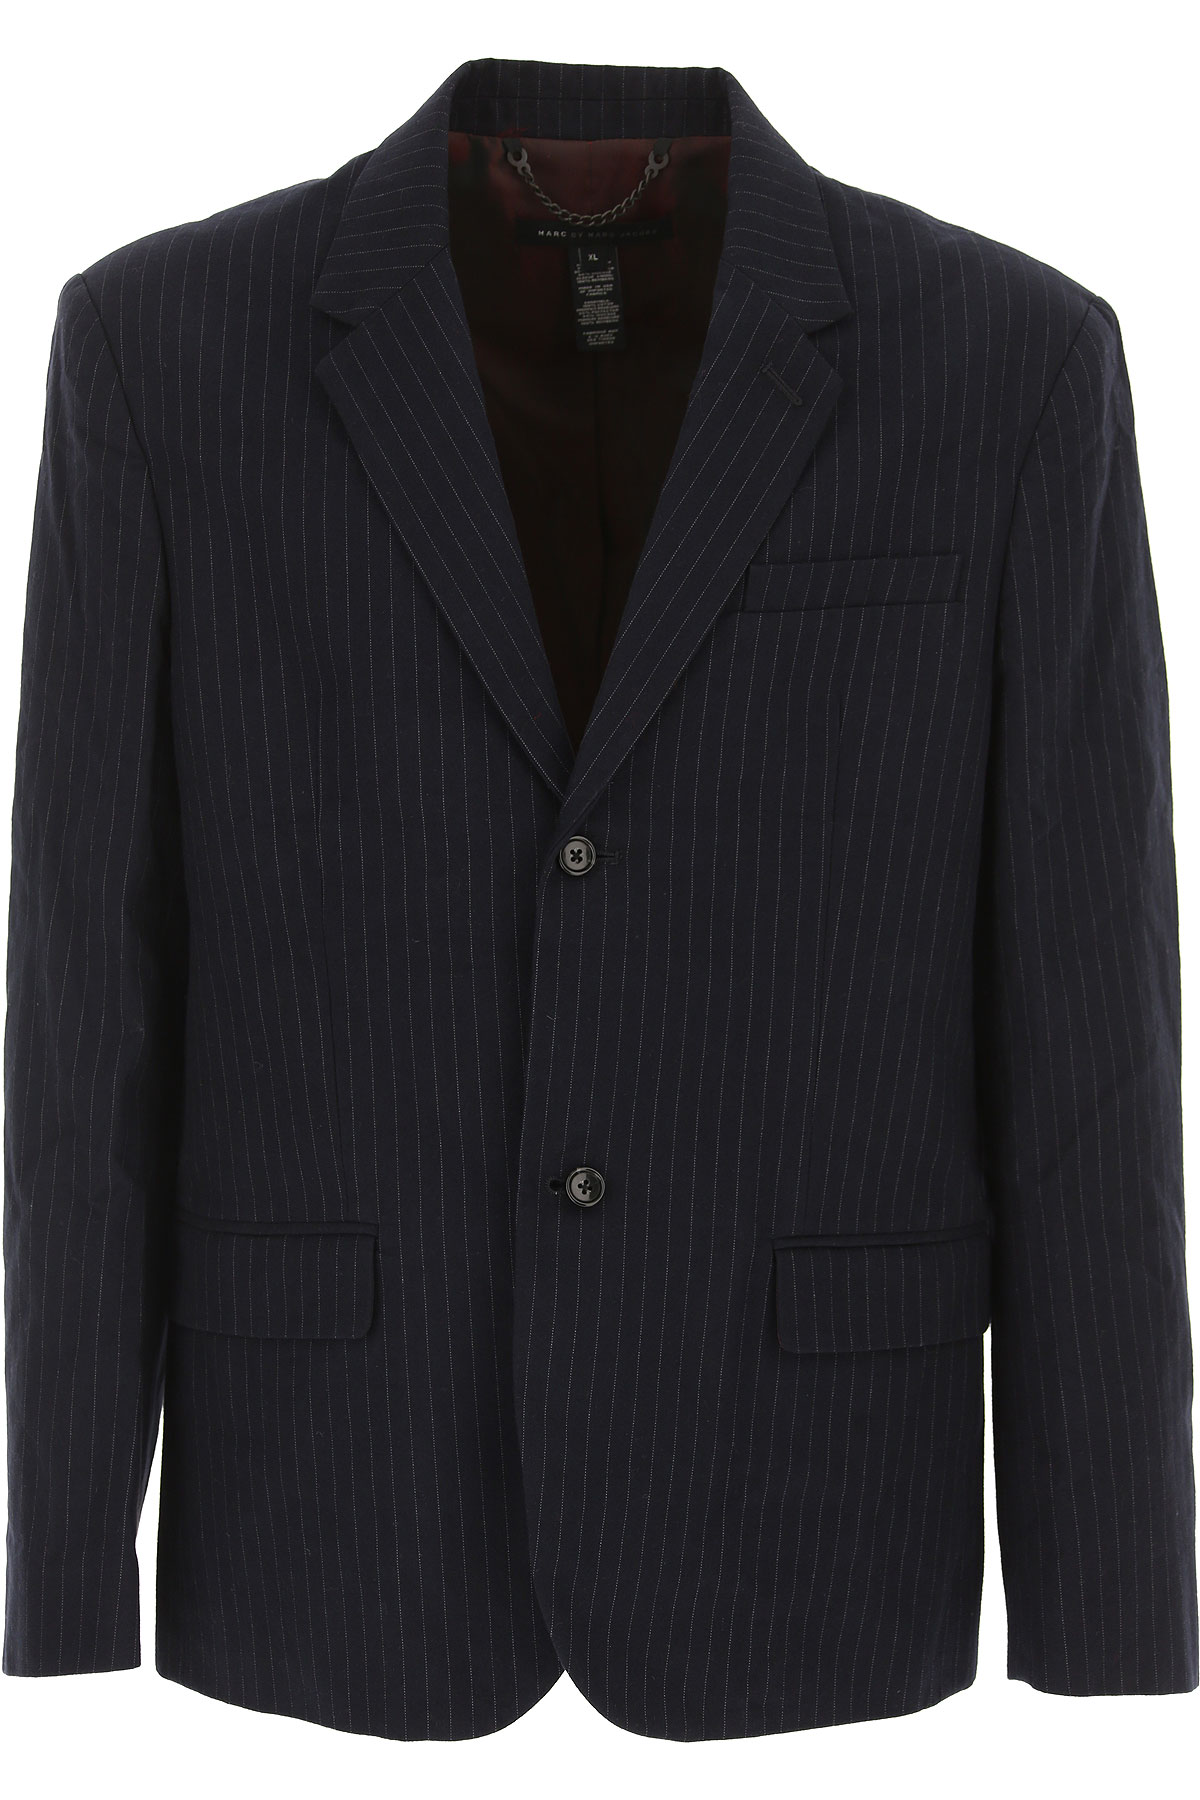 Mens Clothing Marc Jacobs, Style code: m2122409-blu-n425